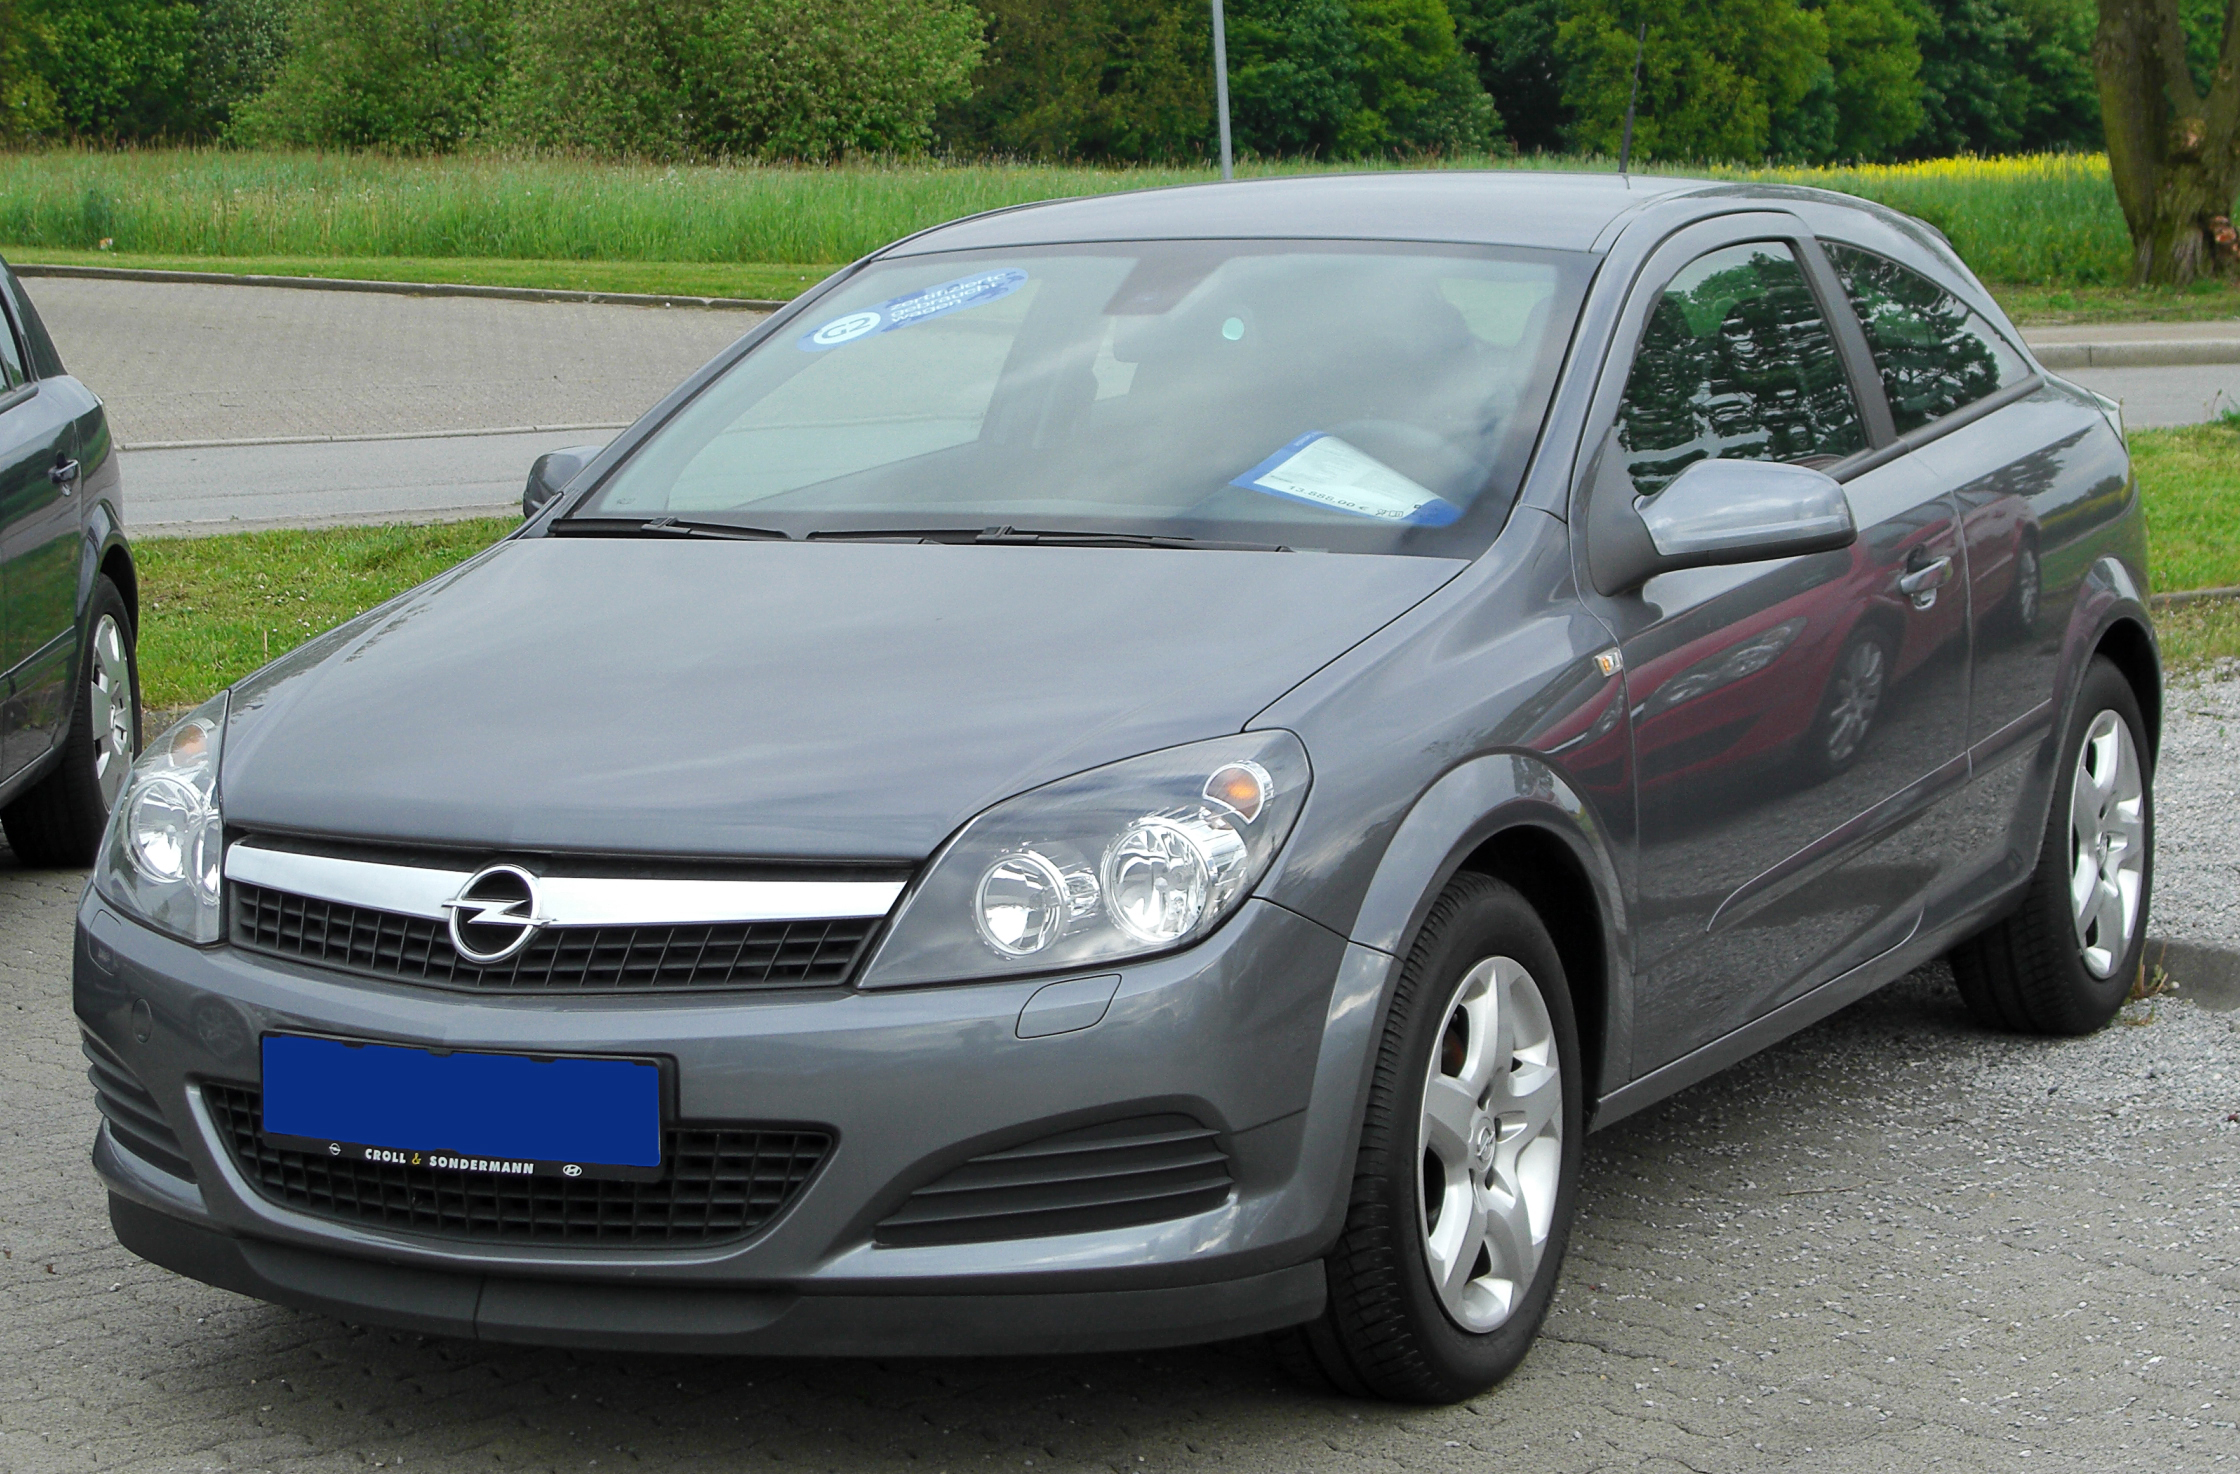 Datei:Opel Astra H GTC (Facelift, seit 2007) front MJ.JPG – Wikipedia